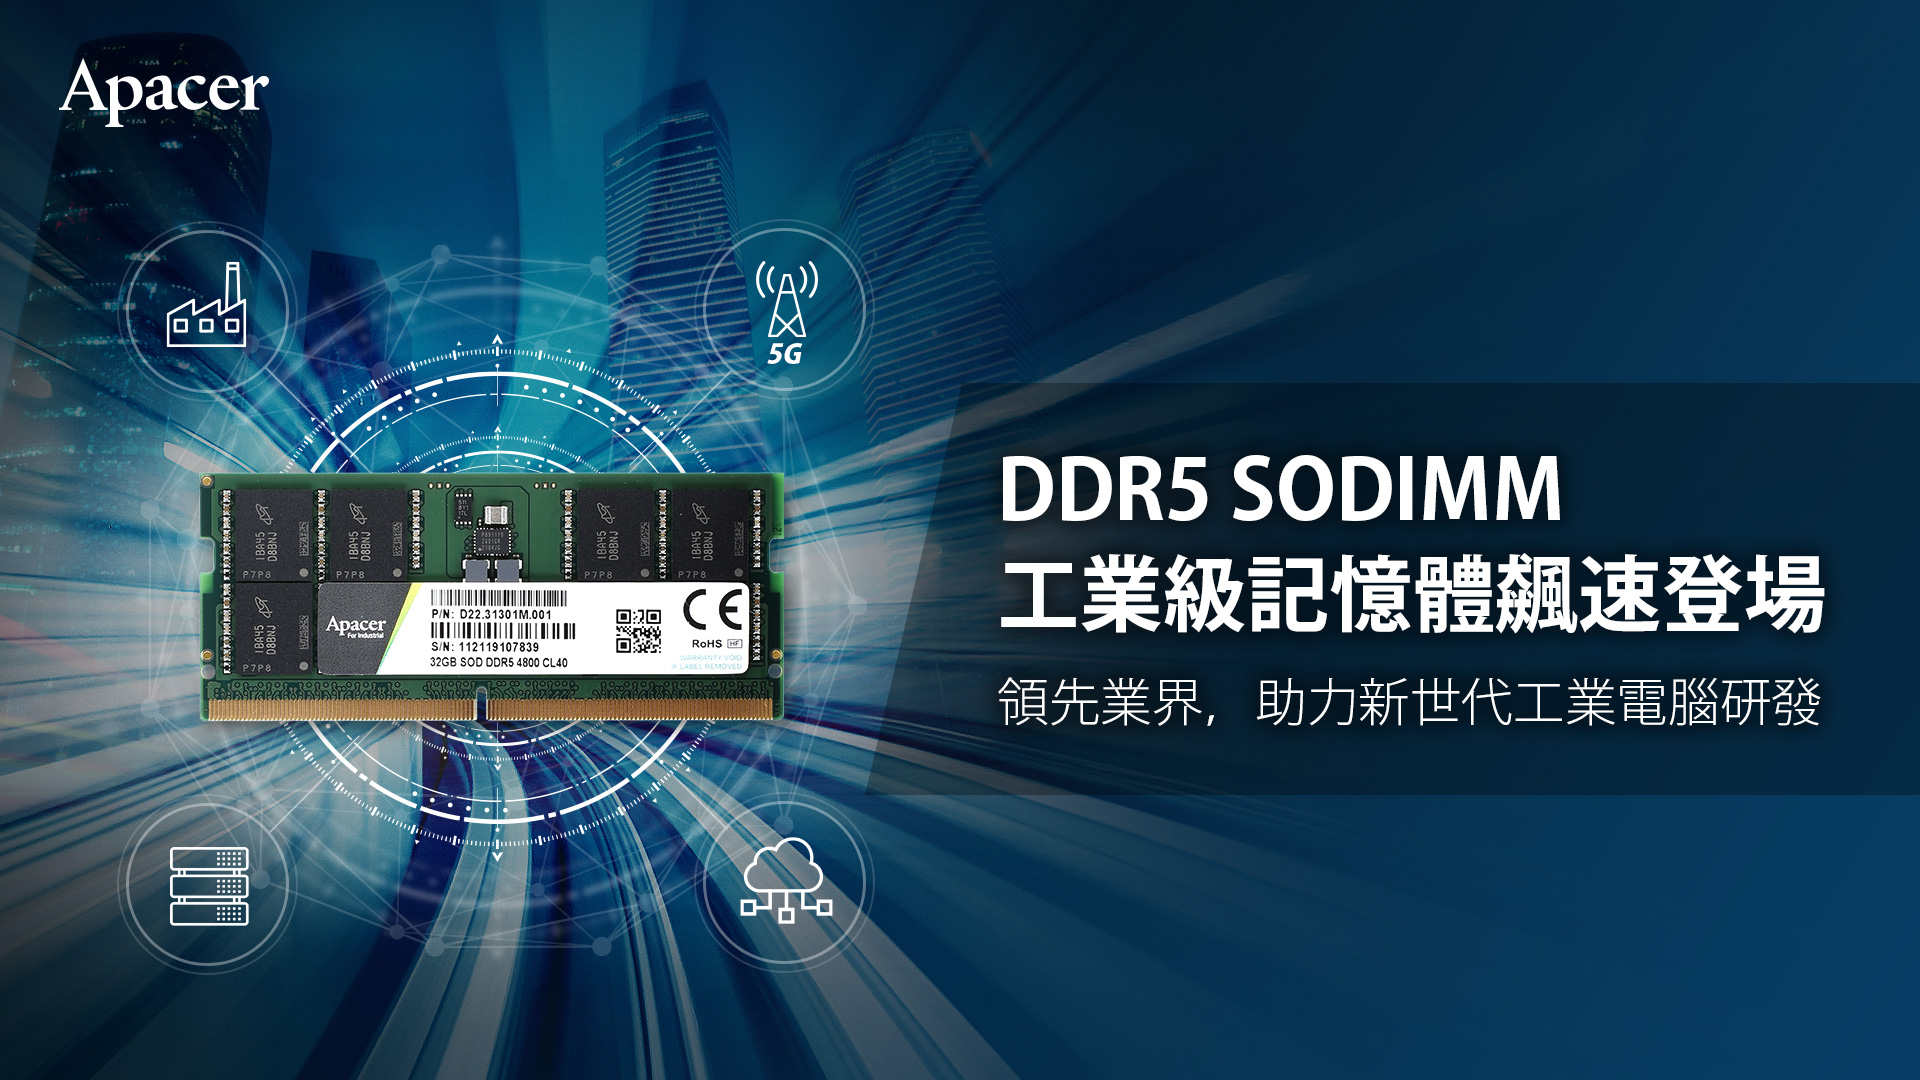 DDR5 SODIMM_PR_TW_.jpg (560 KB)